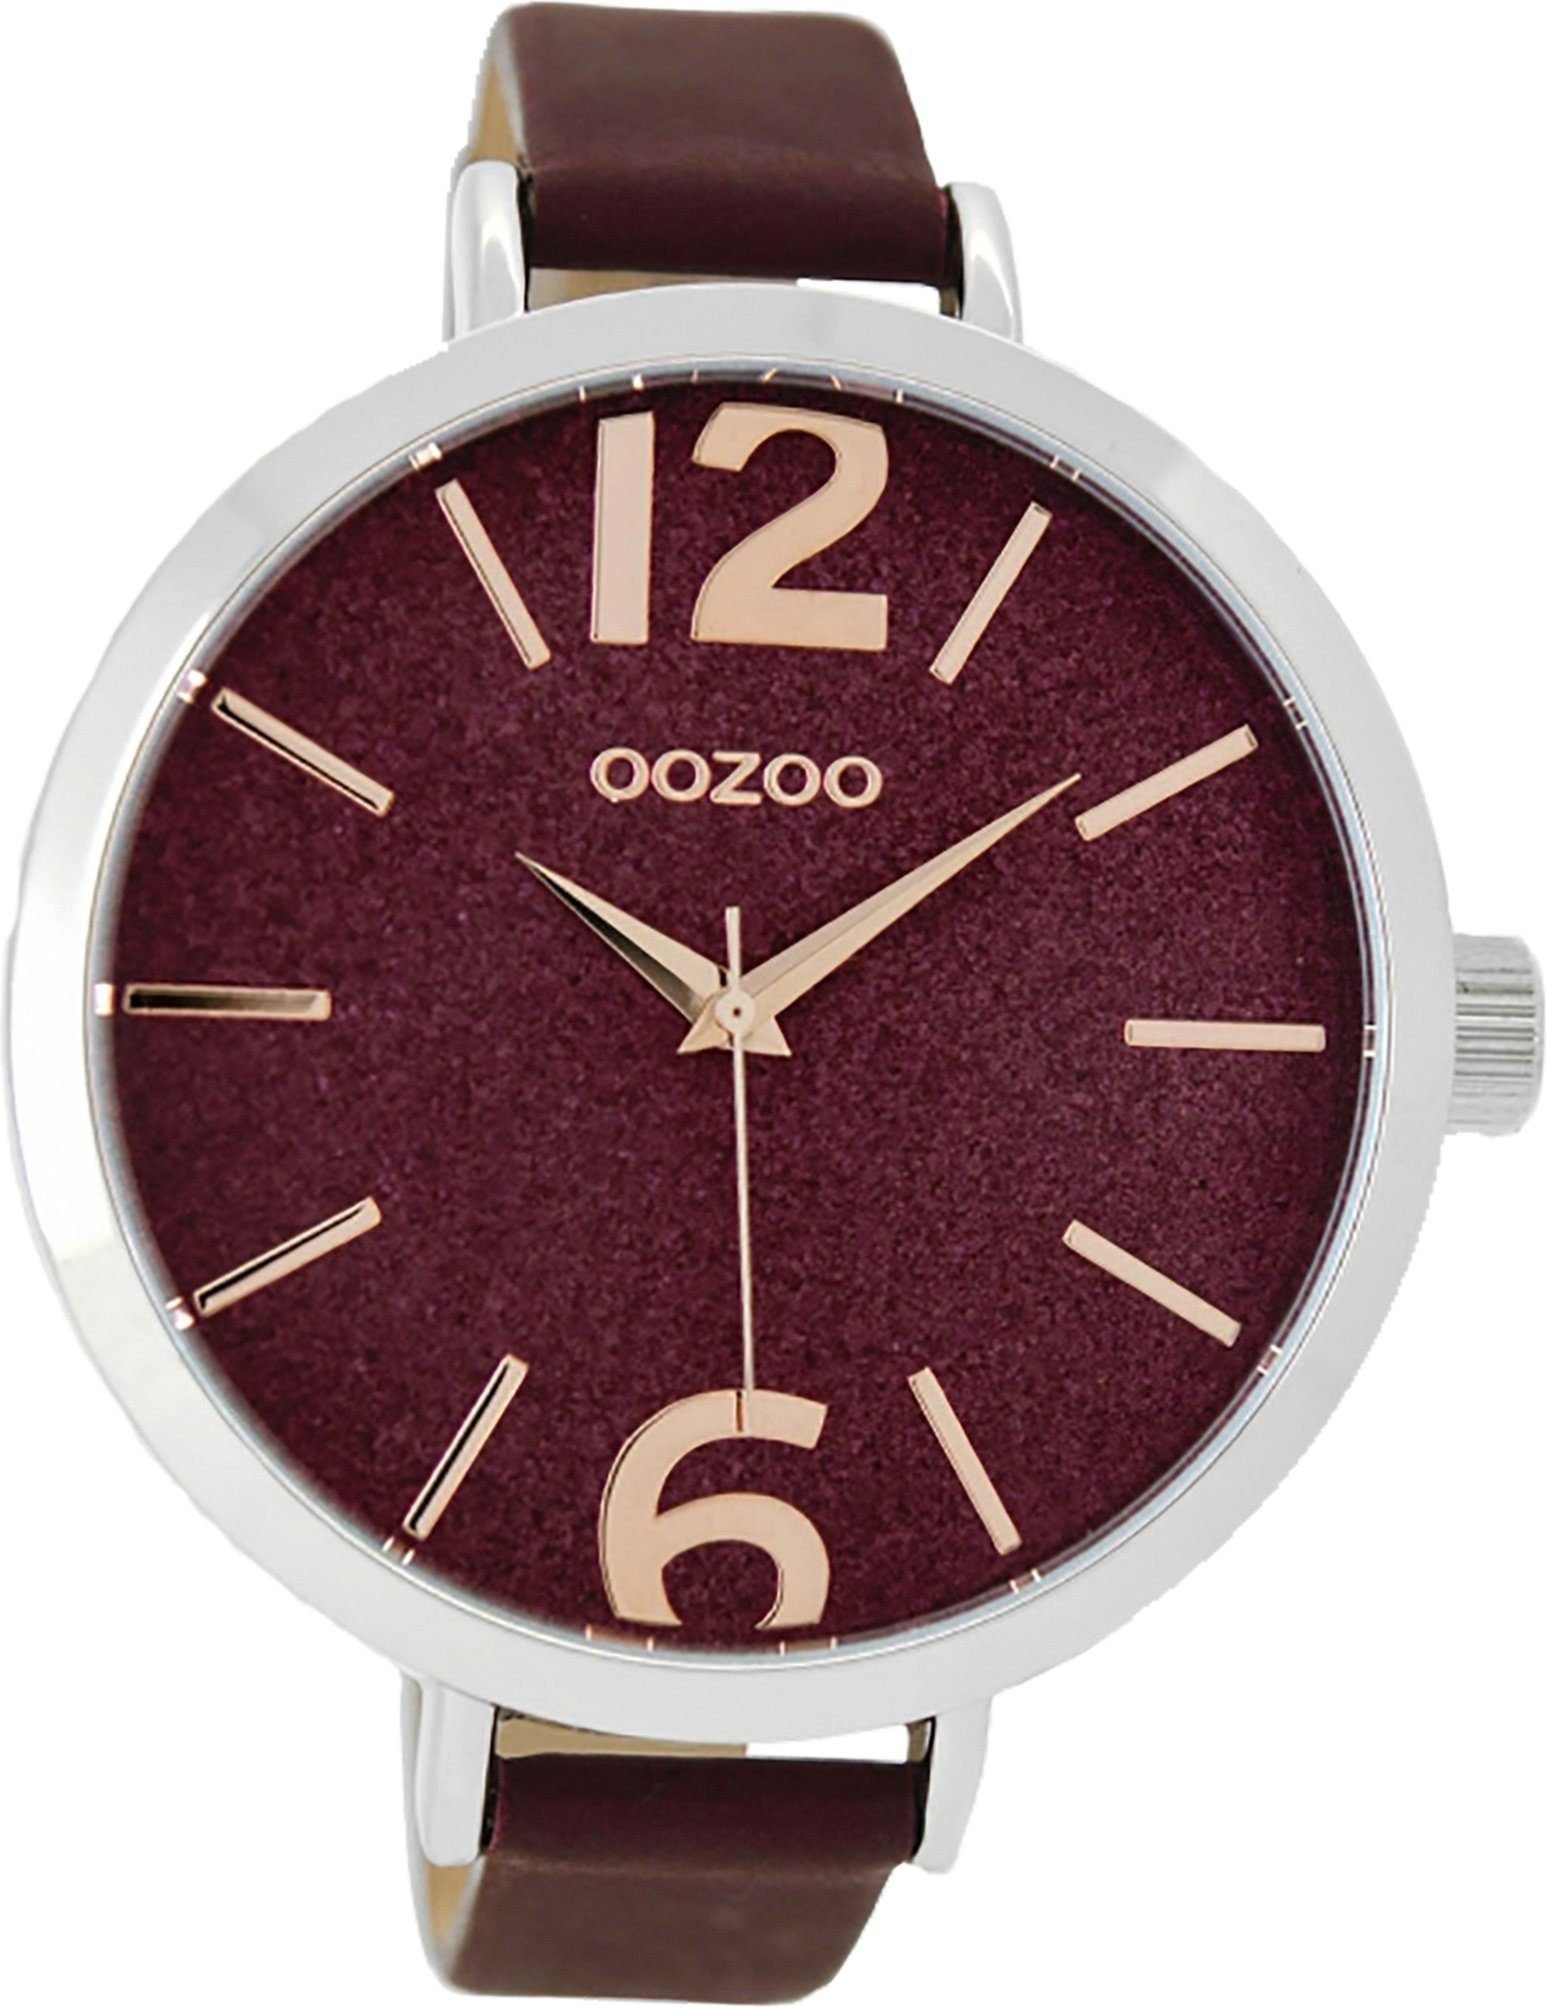 OOZOO Quarzuhr Oozoo Quarz-Uhr Damen silber Timepieces, Damenuhr Lederarmband rot, rundes Gehäuse, extra groß (ca. 48mm)